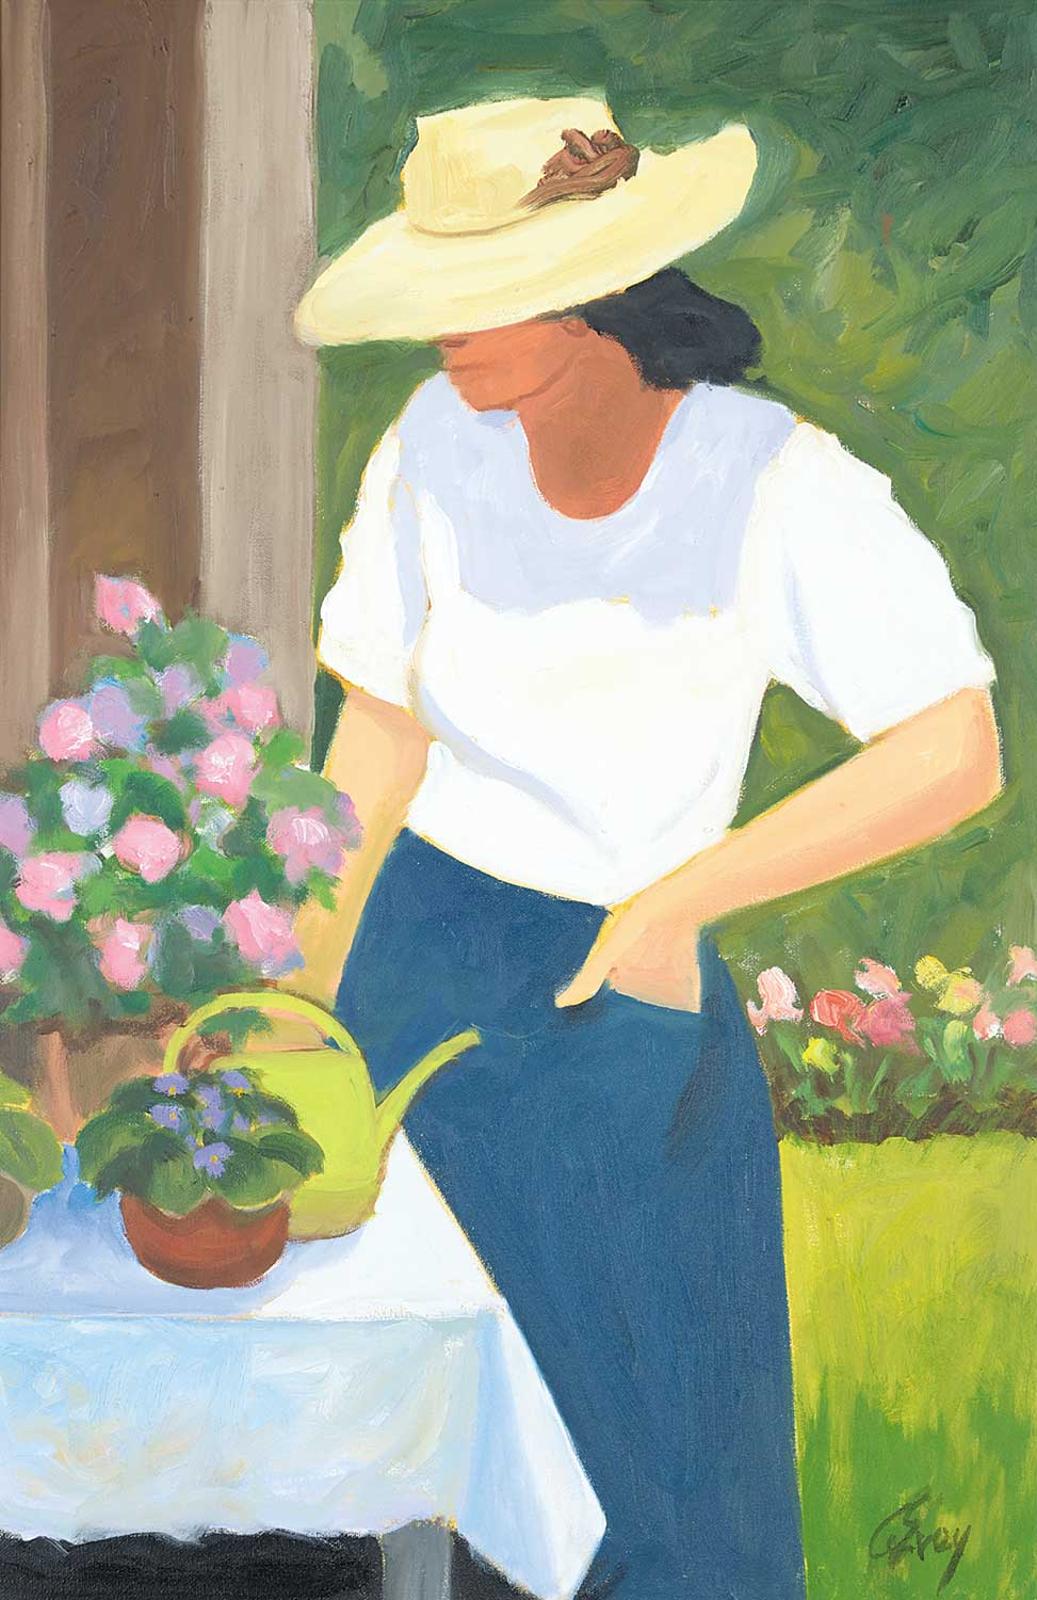 George Arthur [Art] Evoy - Untitled - The Gardener